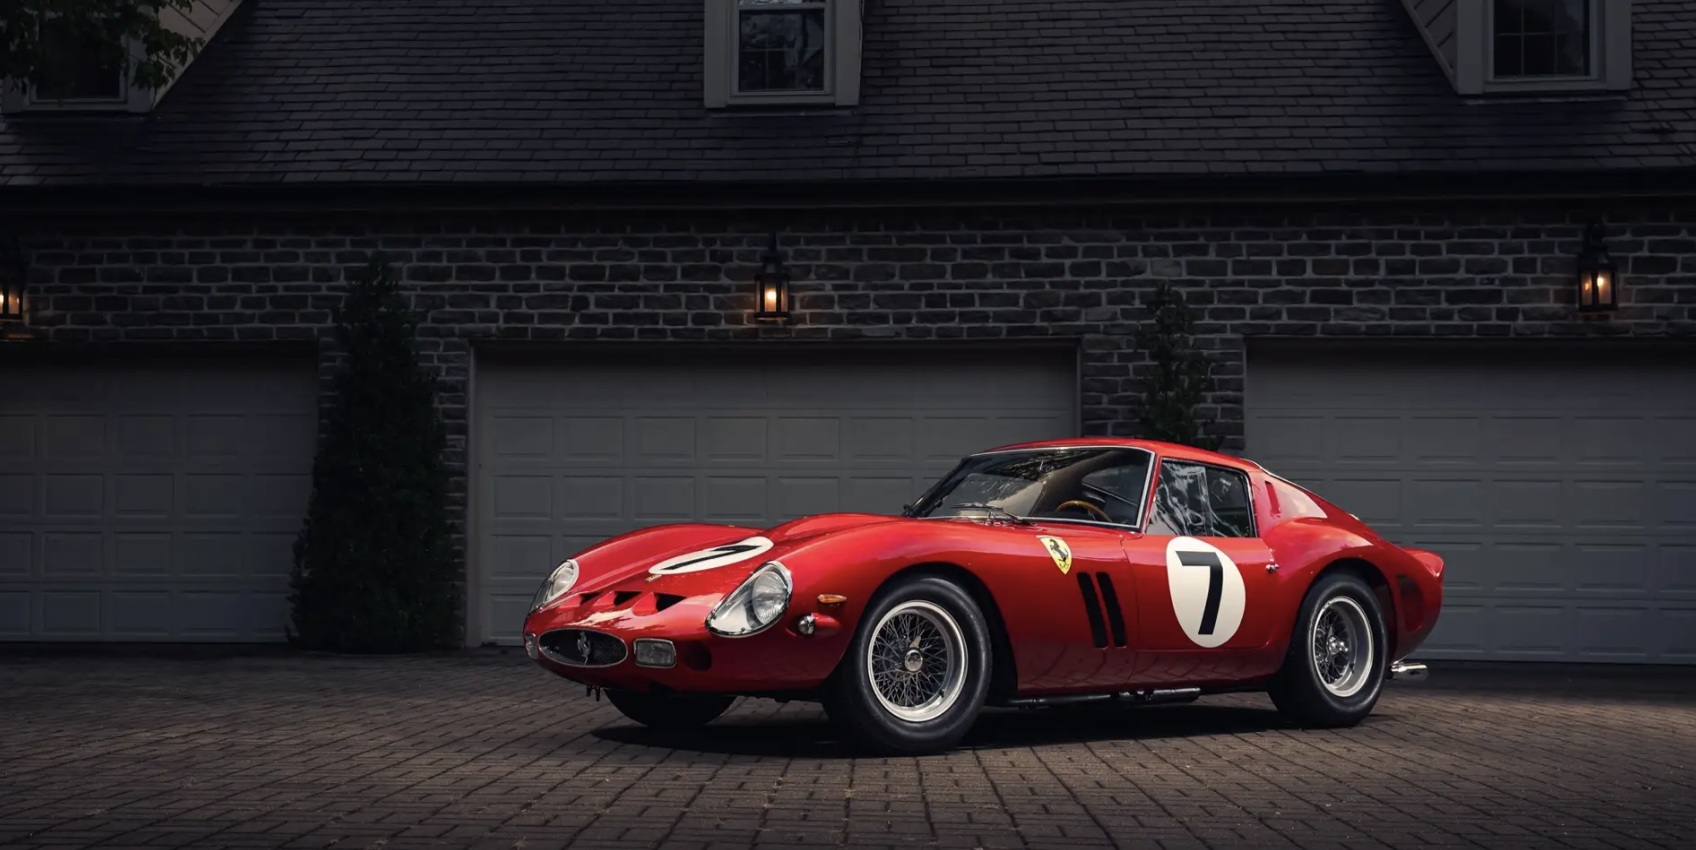 $51 Million Ferrari 250 GTO Sets Public Sale Record At Sotheby's